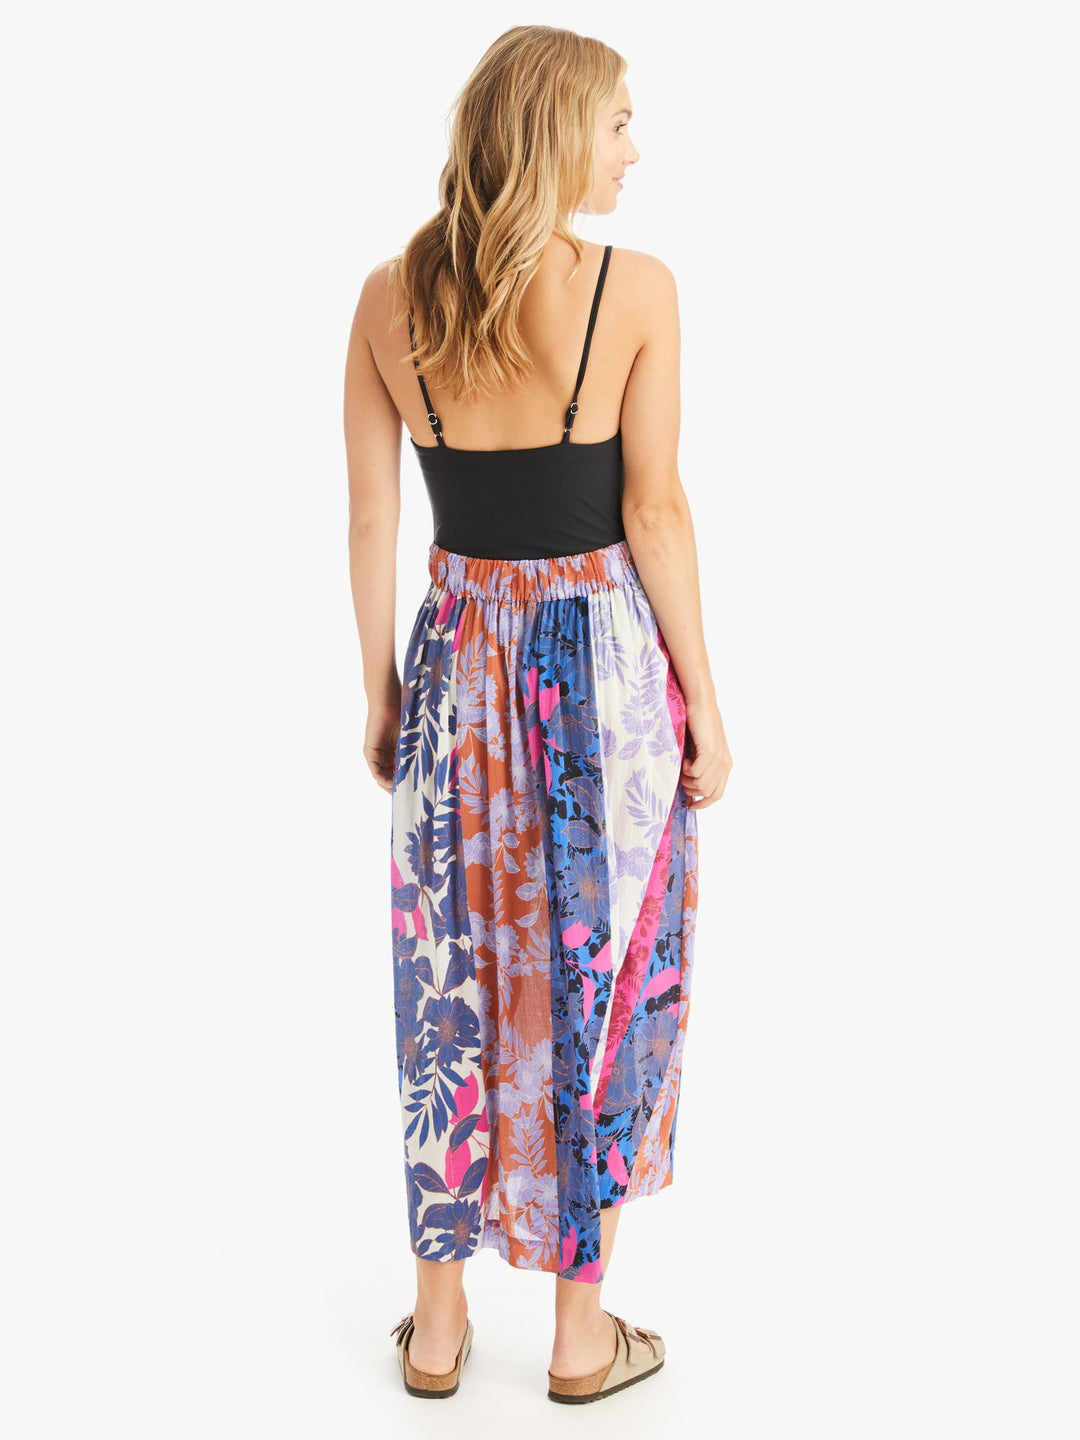 Xirena - Teagan Printed Skirt in Pinks